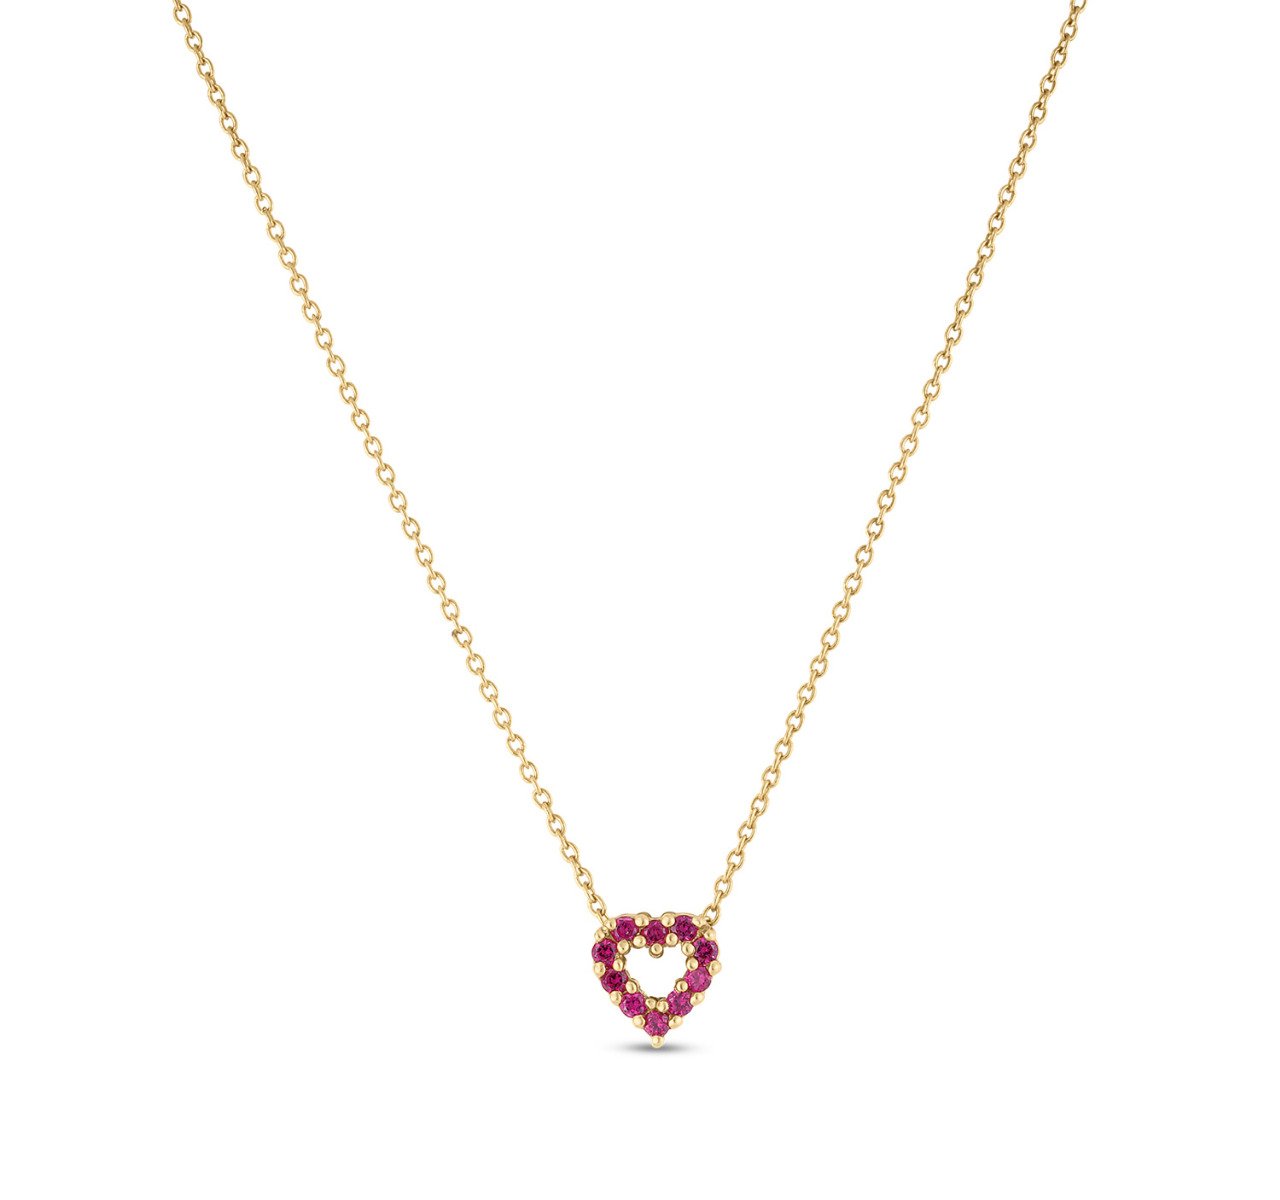 Roberto Coin "Tiny Treasures" Ruby and Diamond Reversible Heart Necklace